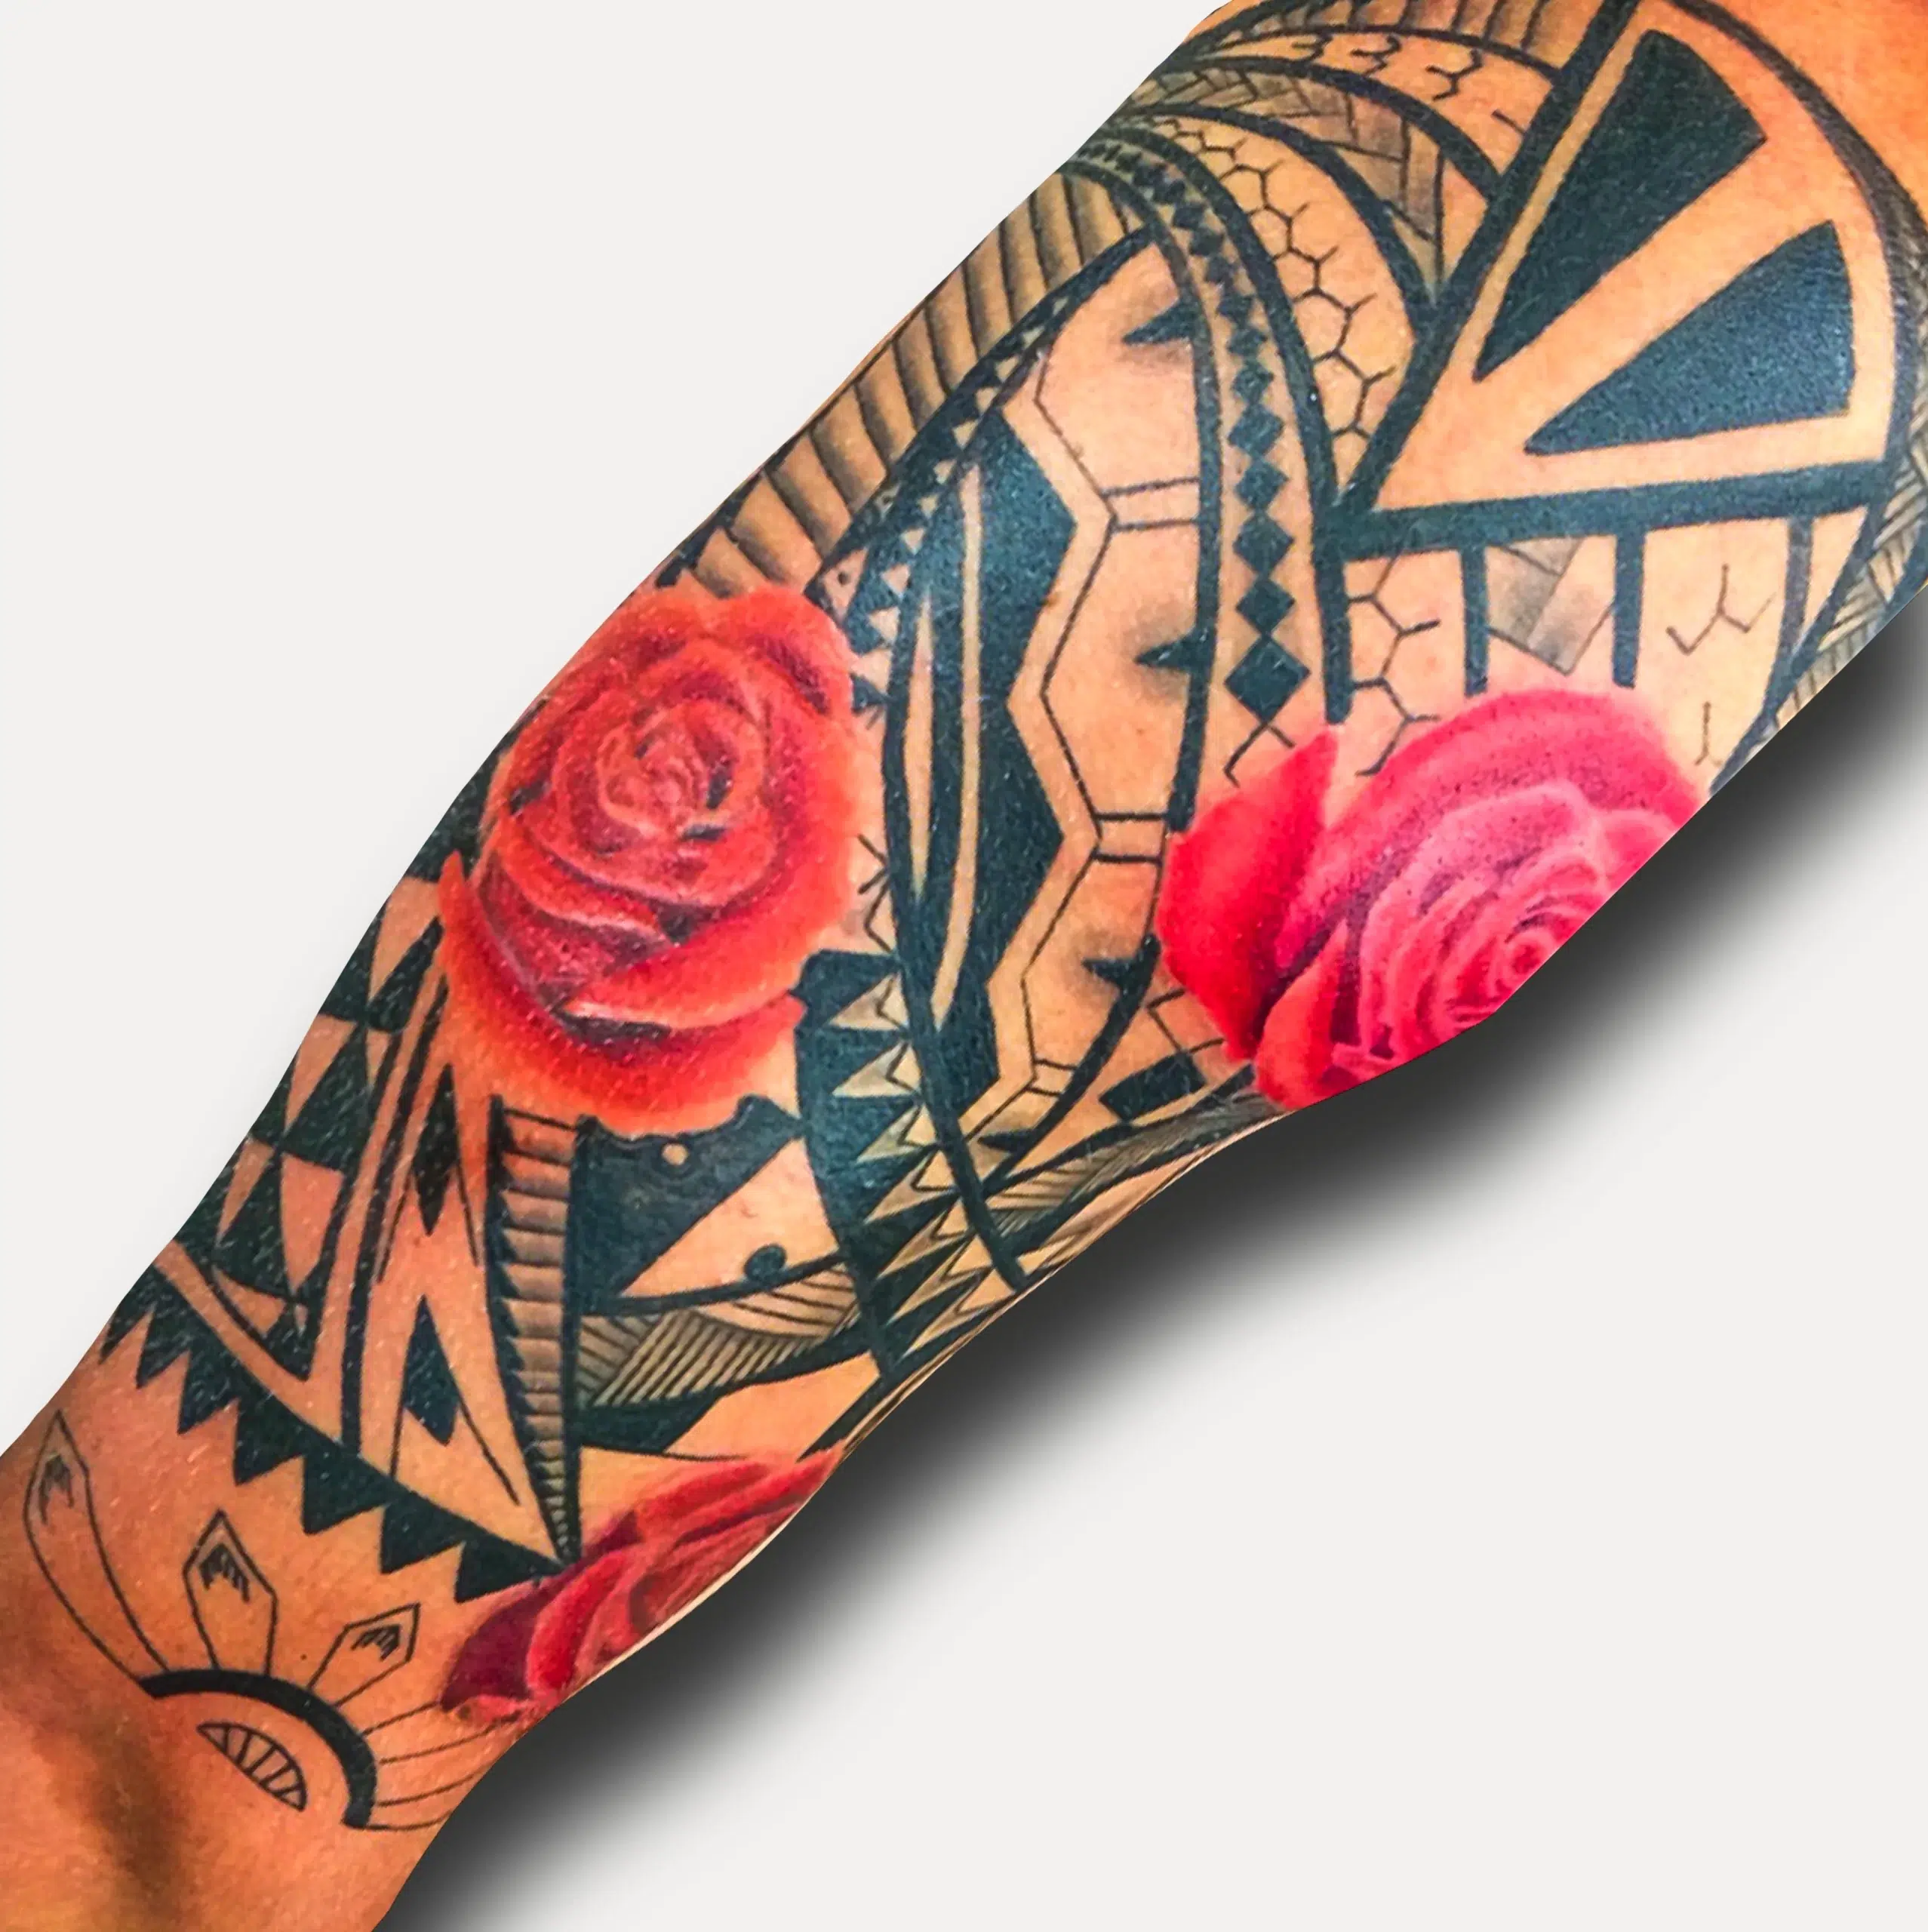 MEEN Tattoos & ART - #handtattoo #handtattoos #artwork #tattoodesign # tattoos #rosetattoo #rosetattoos #artwork #follower #handtattoo  #handtattoosofinstagram #rose #tattooart #clock #dmforart | Facebook